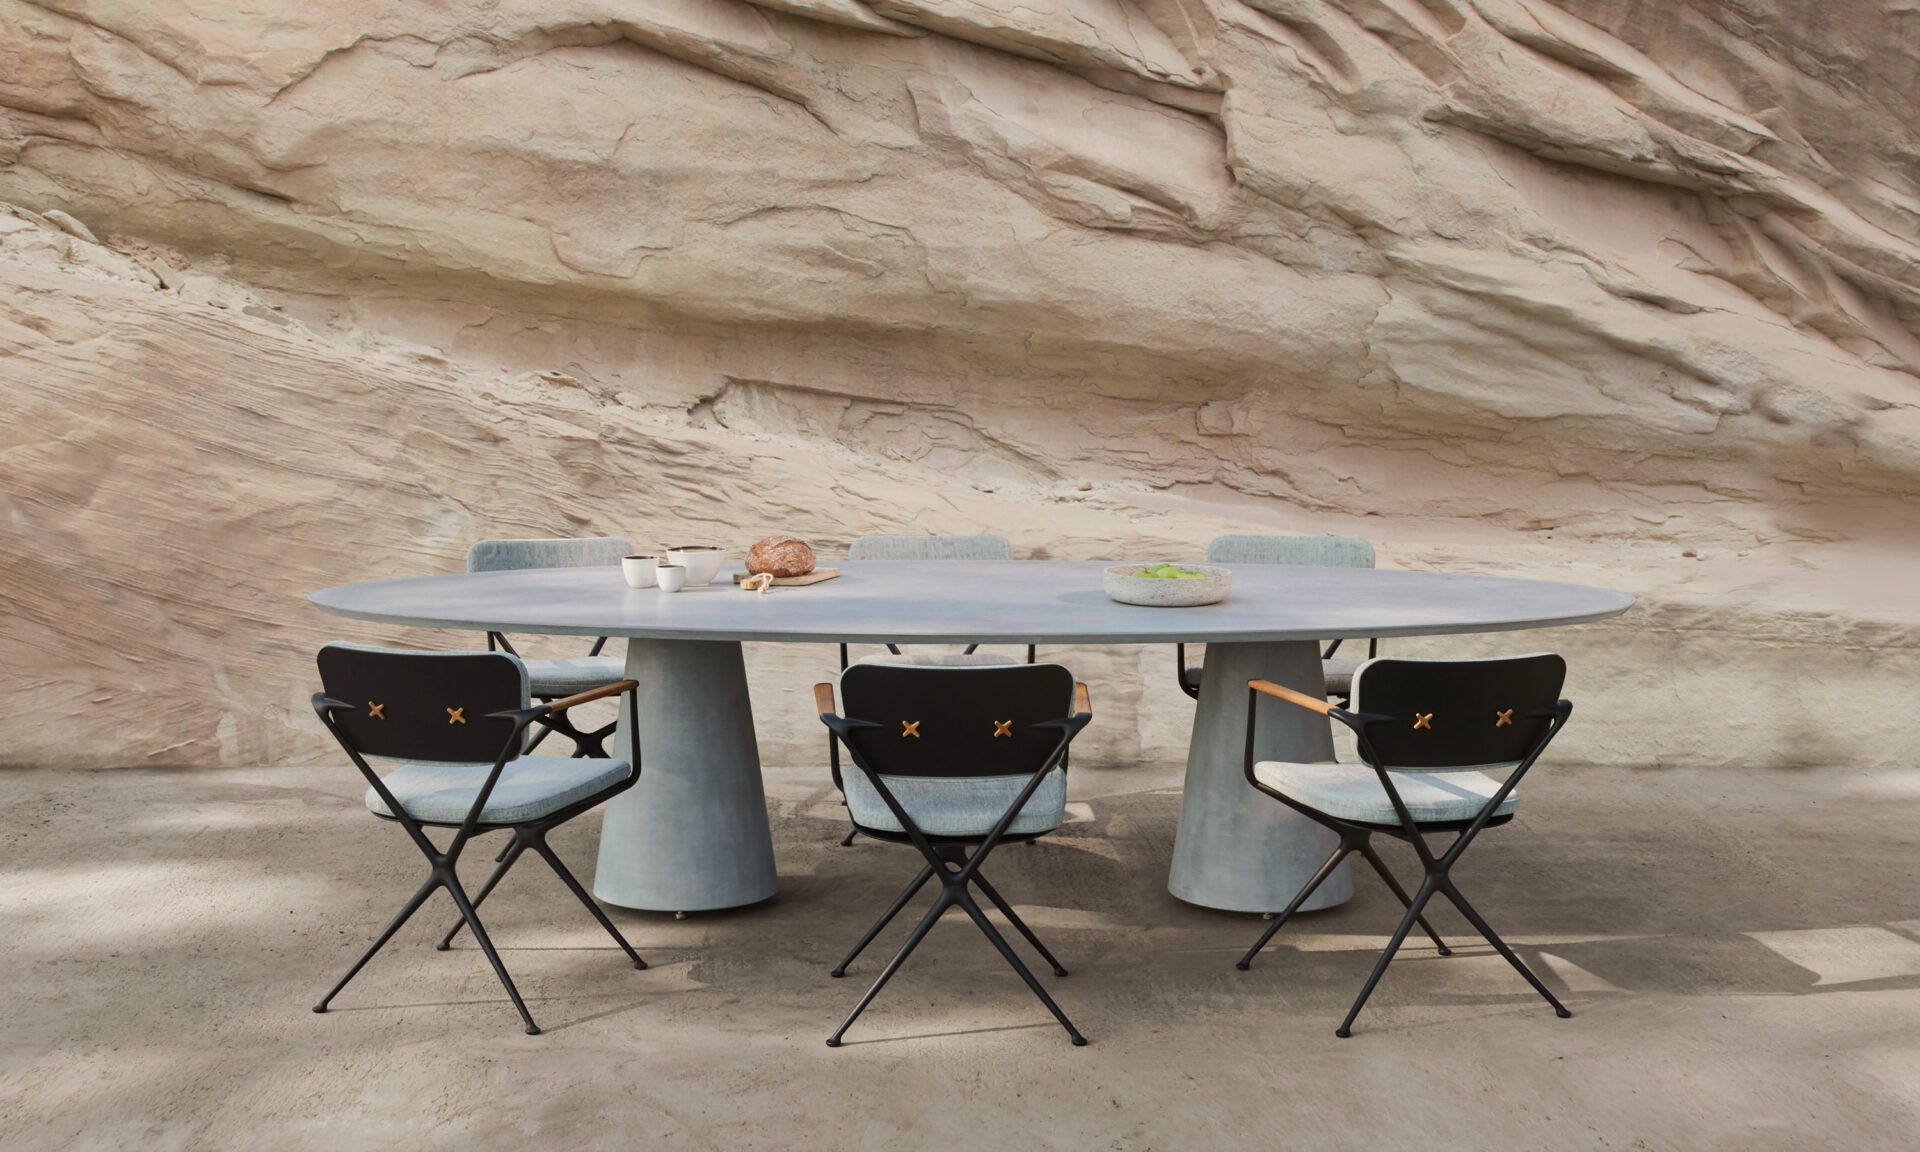 Exes Table 220x120cm Alu Legs Anthracite - Table Top Ceramic Terra Sabbia